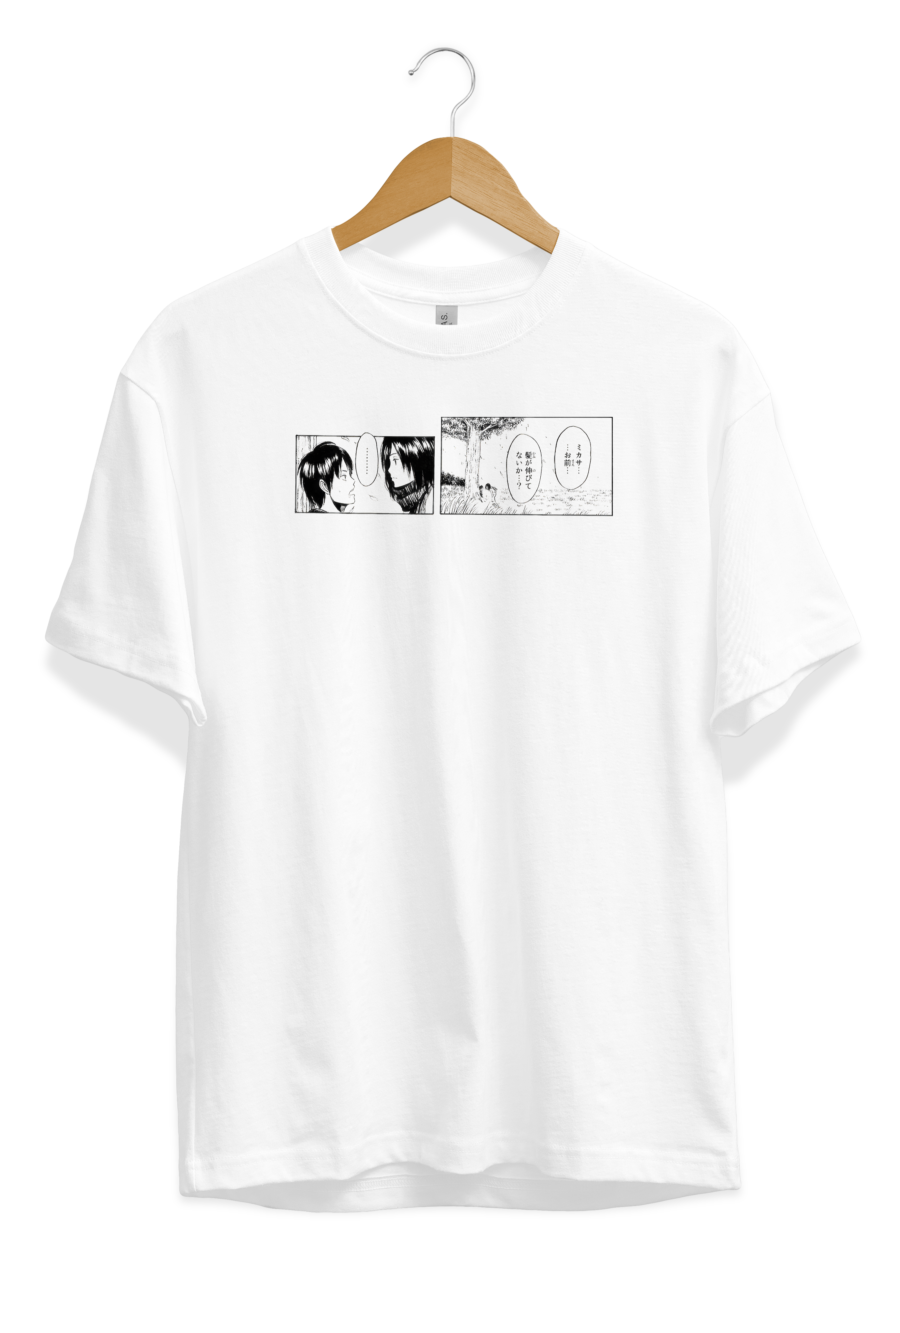 Mikasa long hair T-Shirt collectibles and merchandise